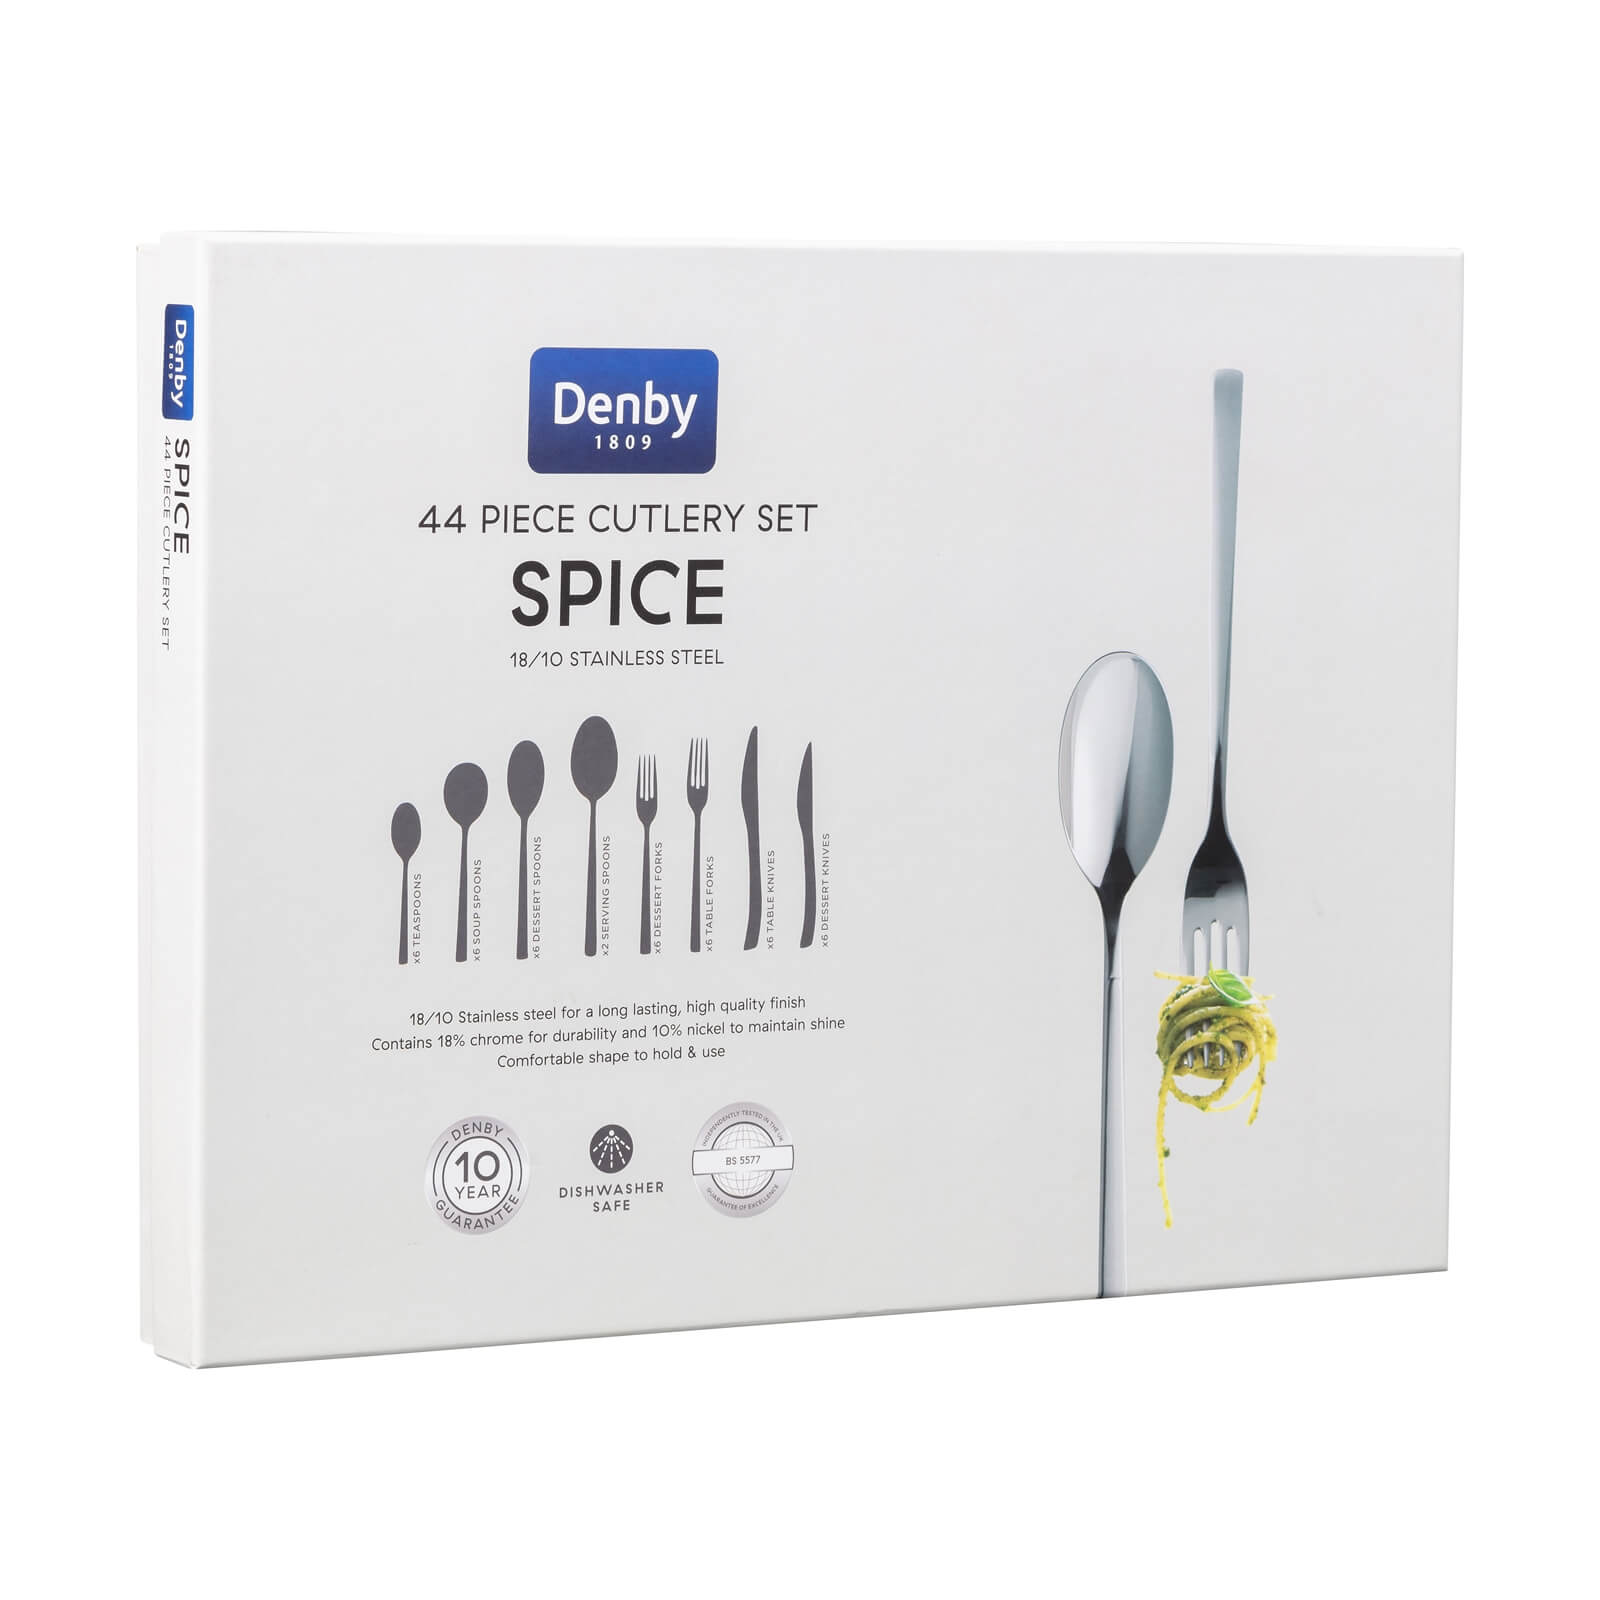 Denby Spice Cutlery Set - 44 Pieces